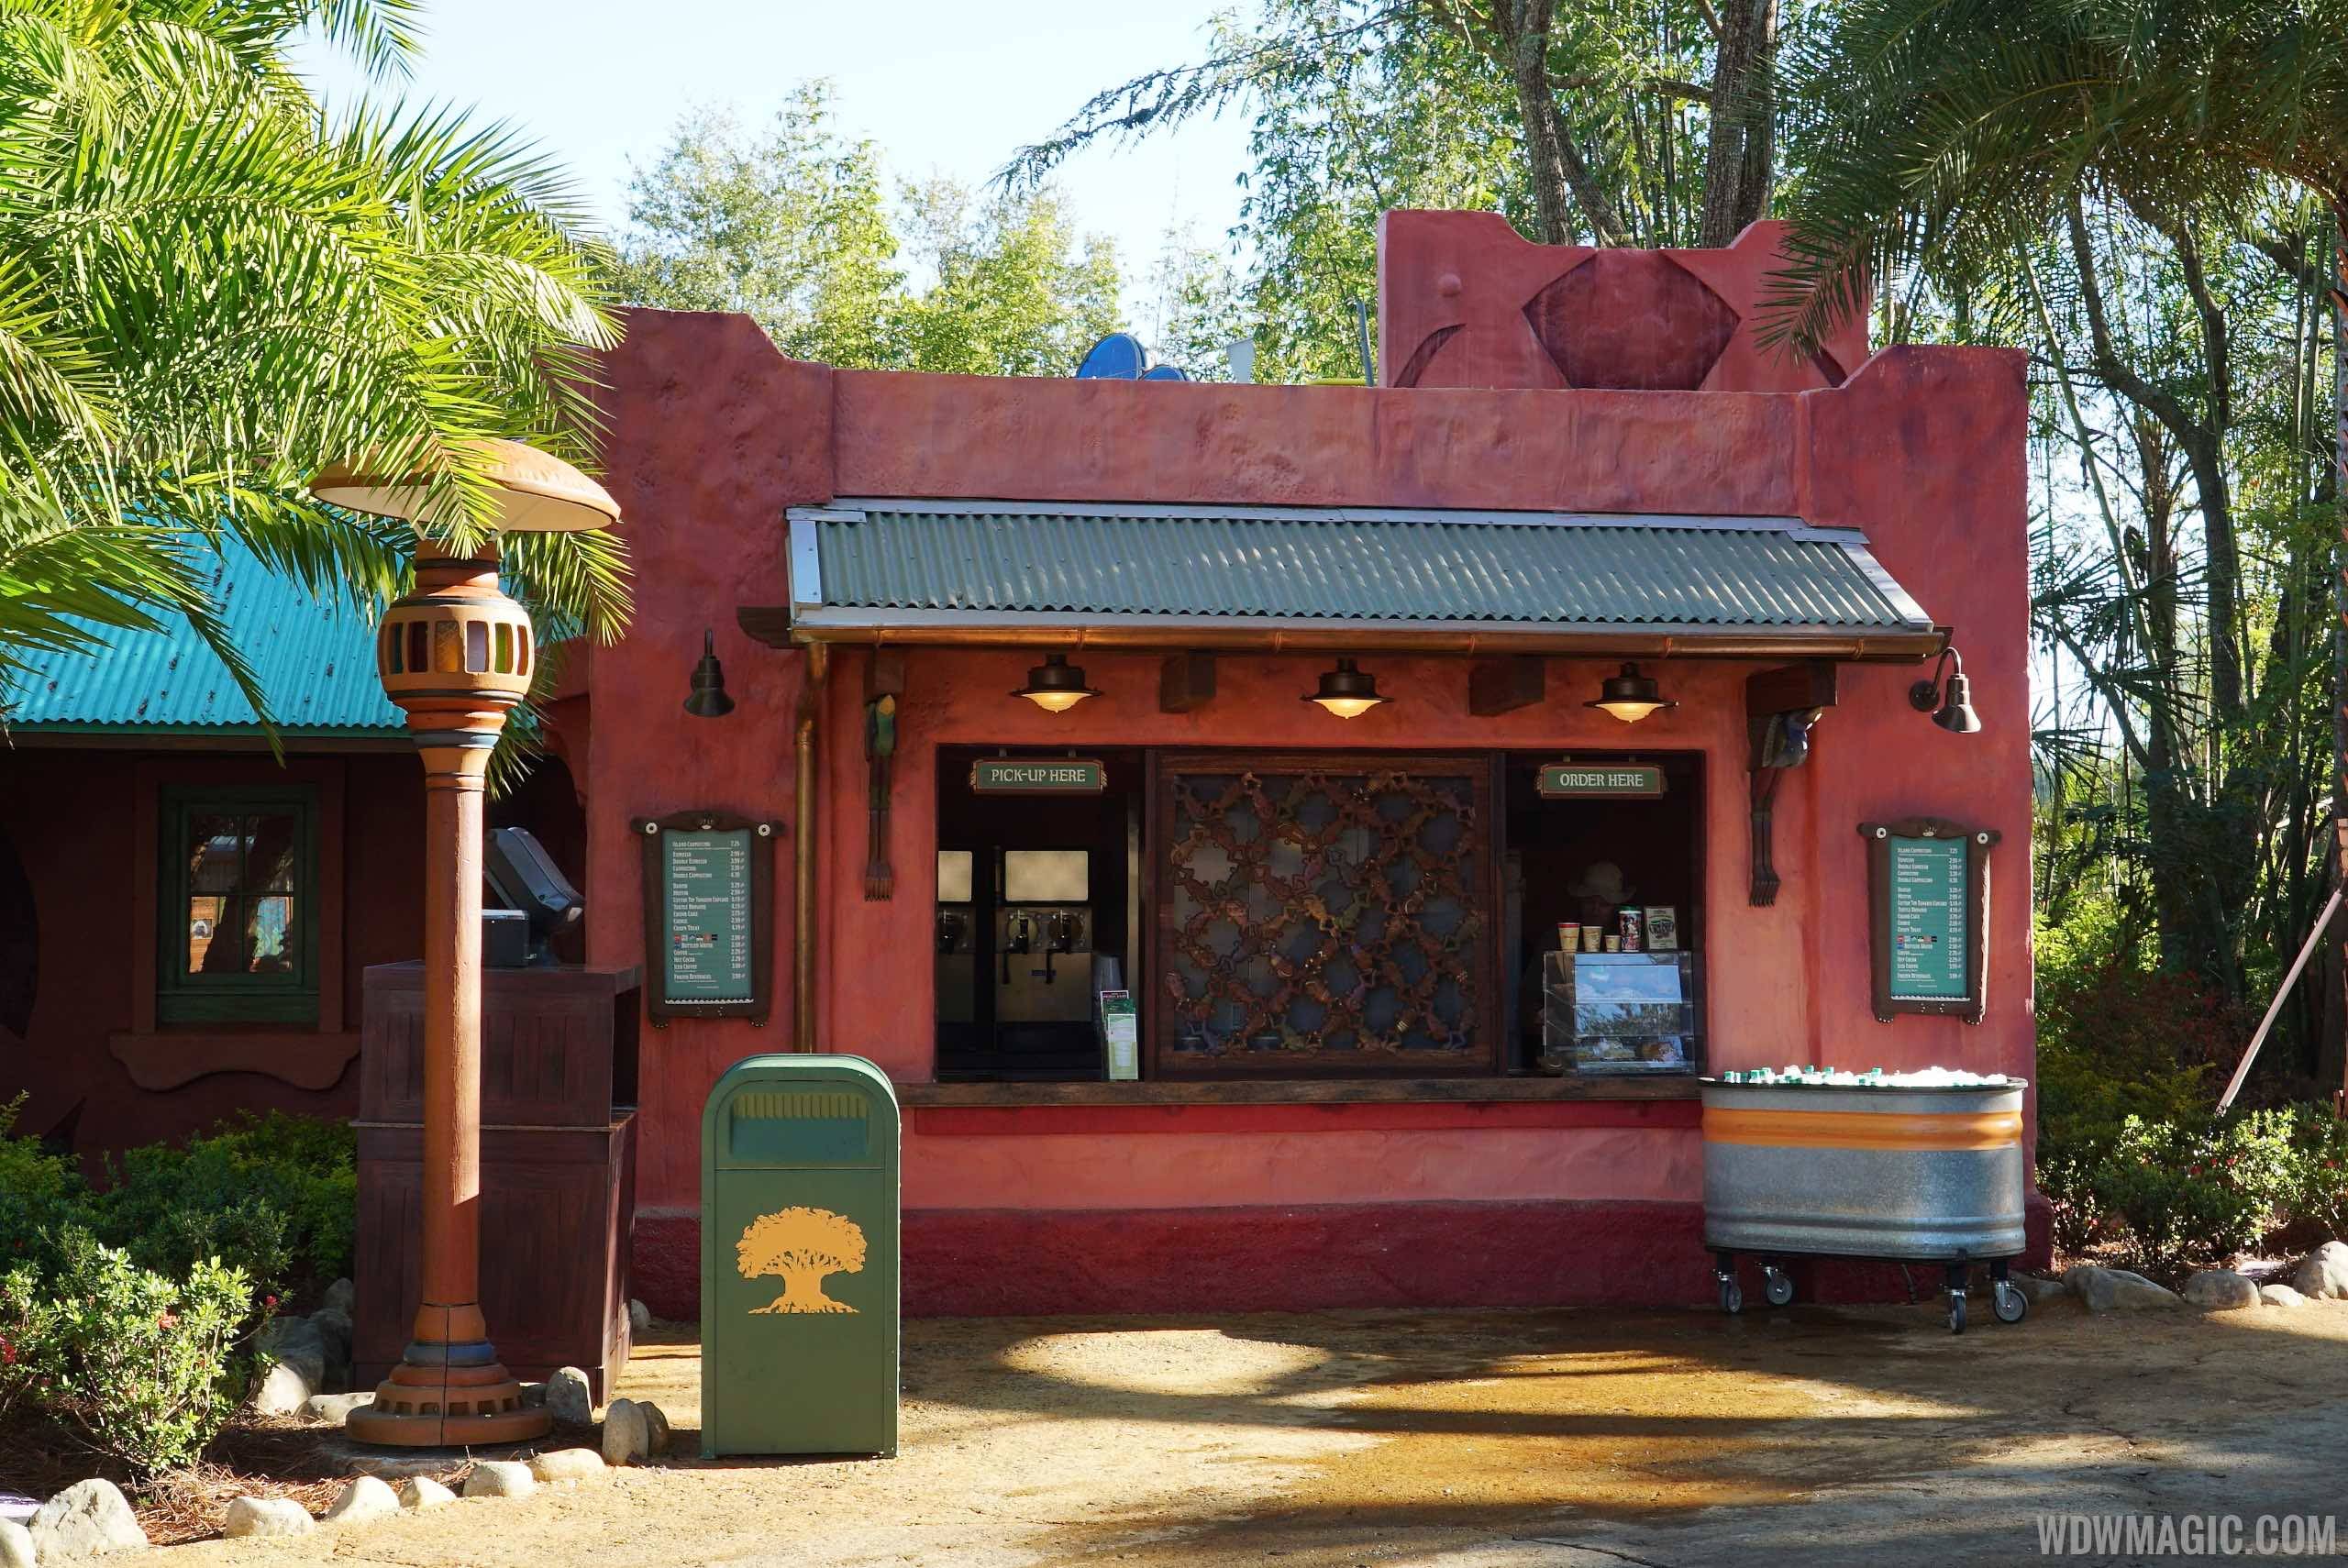 PHOTOS - Isle of Java coffee kiosk opens at Disney's Animal Kingdom